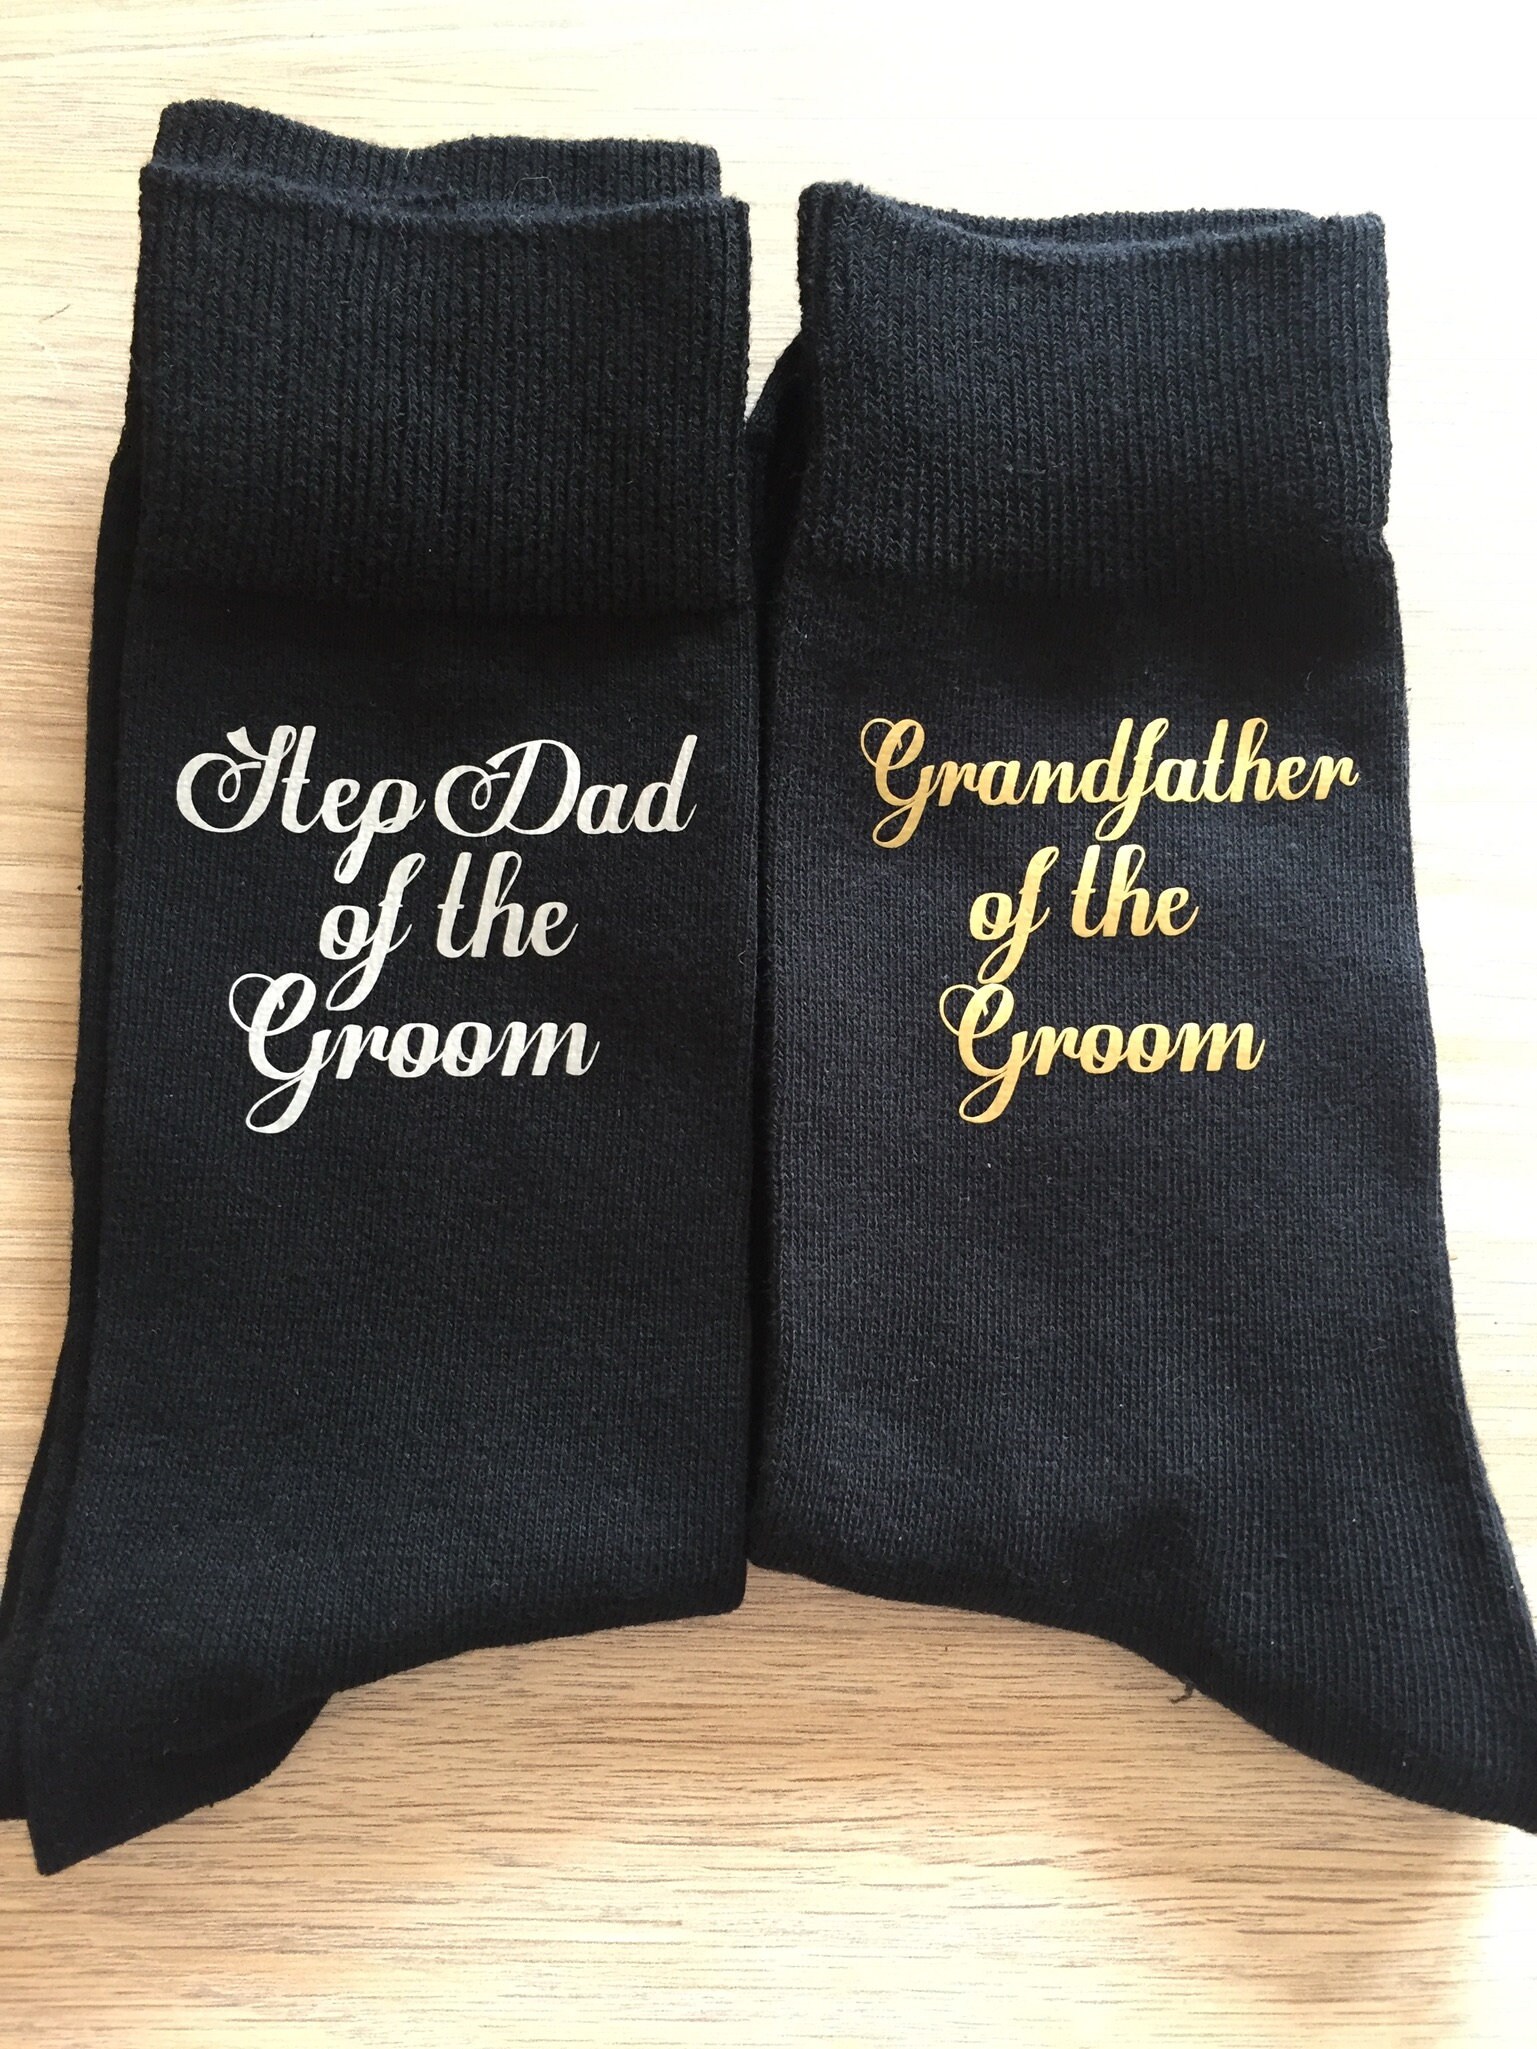 Best Man ushers groomsmen black socks plenty of roles to pick | Etsy